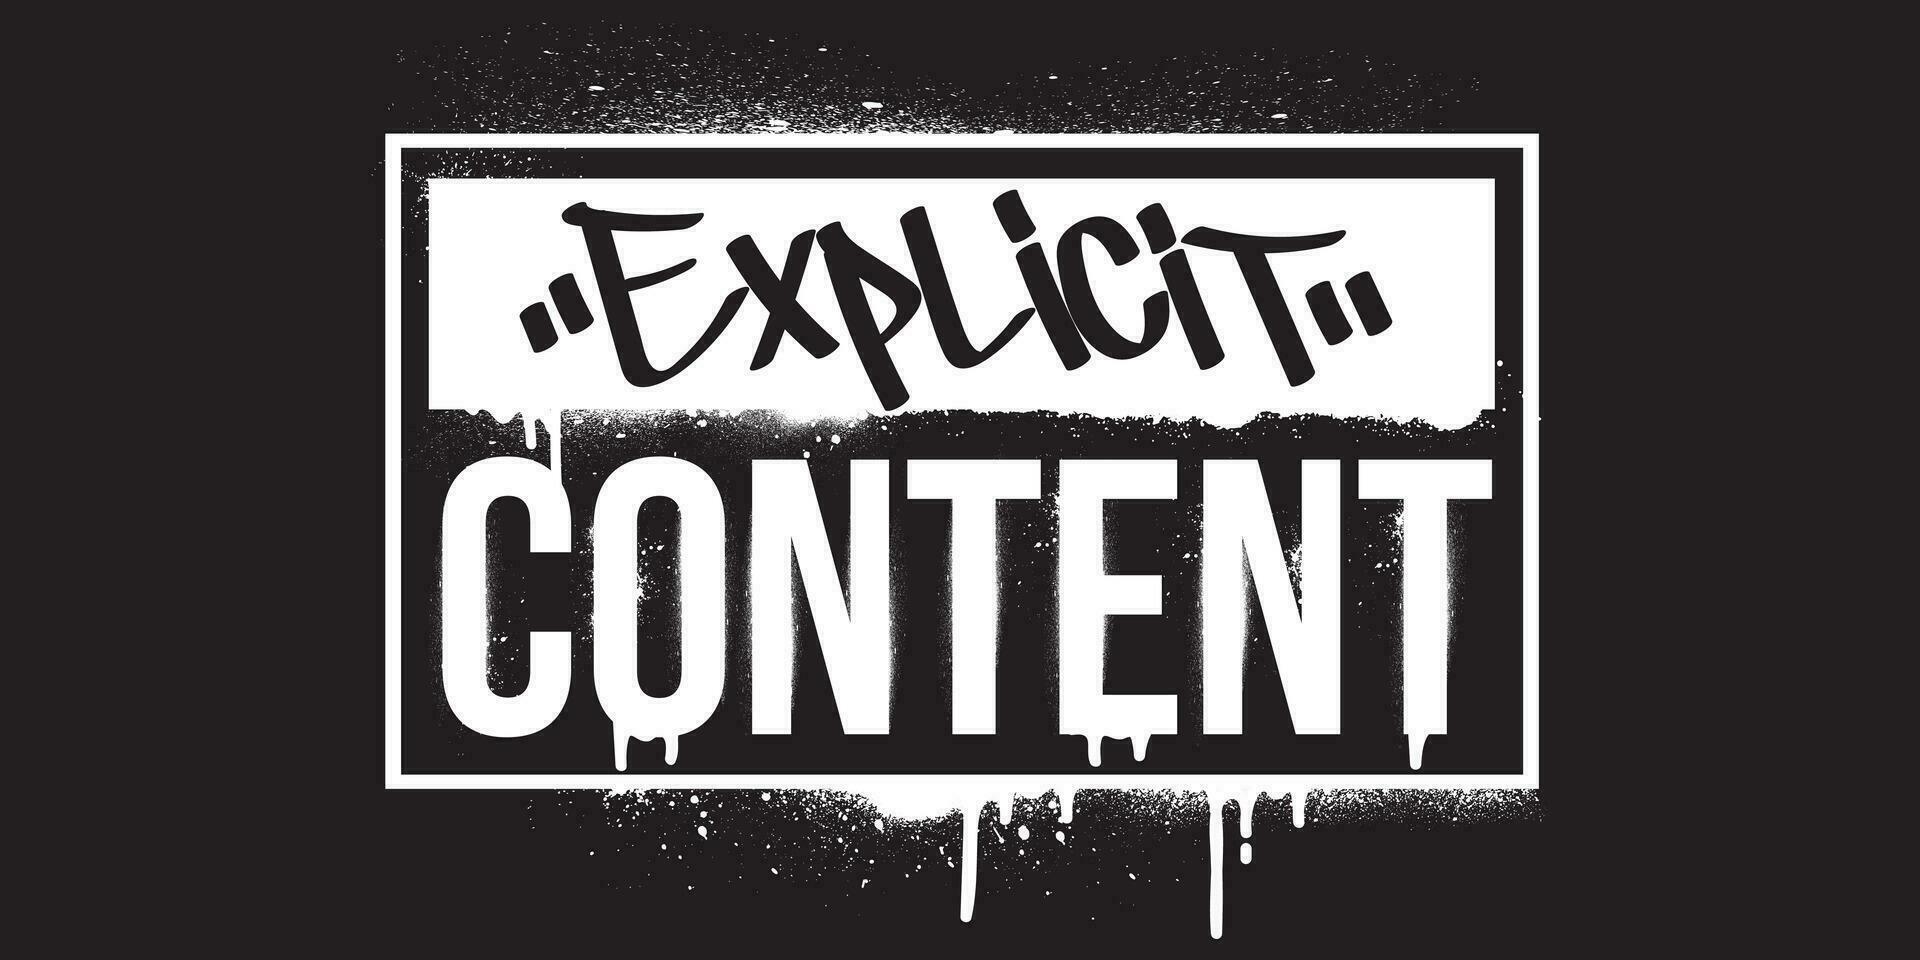 Explicit Content text in graffiti style. Graffiti text vector illustrations.